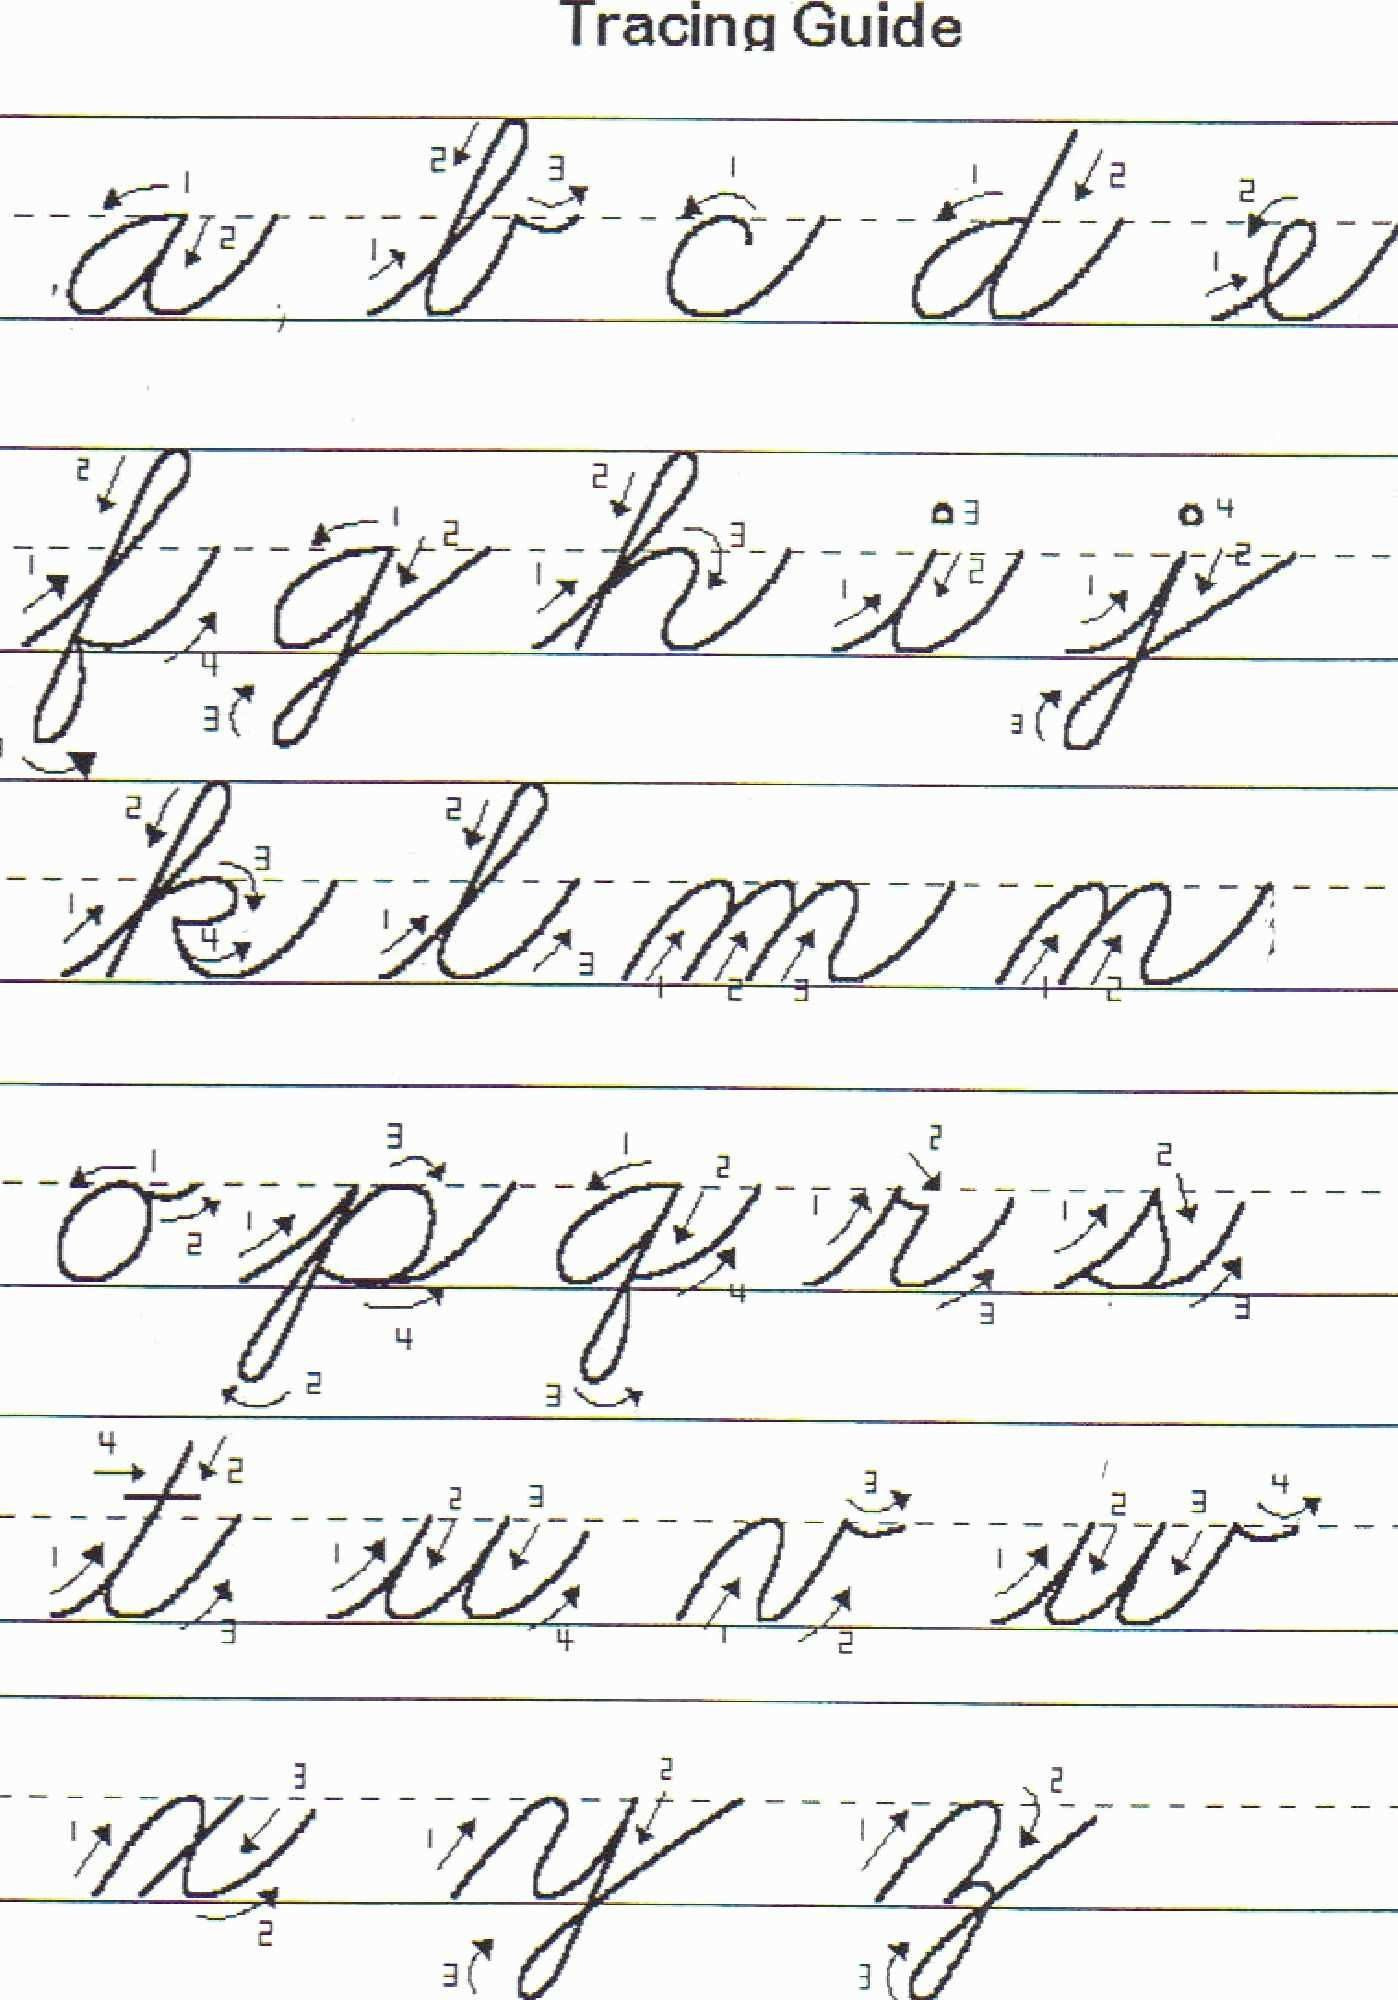 cursive-writing-3rd-grade-practice-sheets-15-images-cursive-writing